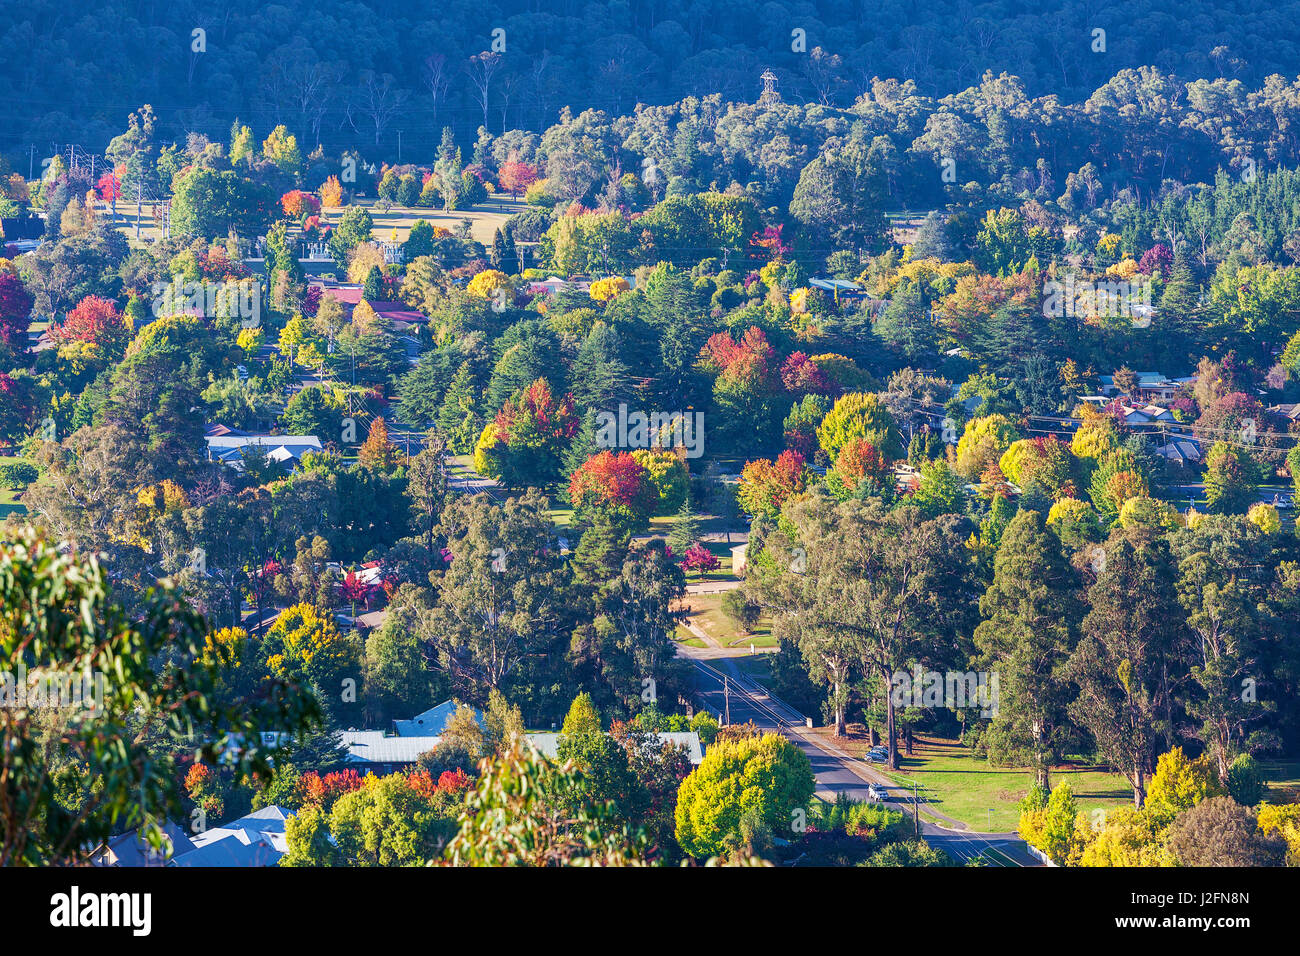 Rural town in autumn - green, yellow, and orange trees. Bright, Victoria, Australia Stock Photo